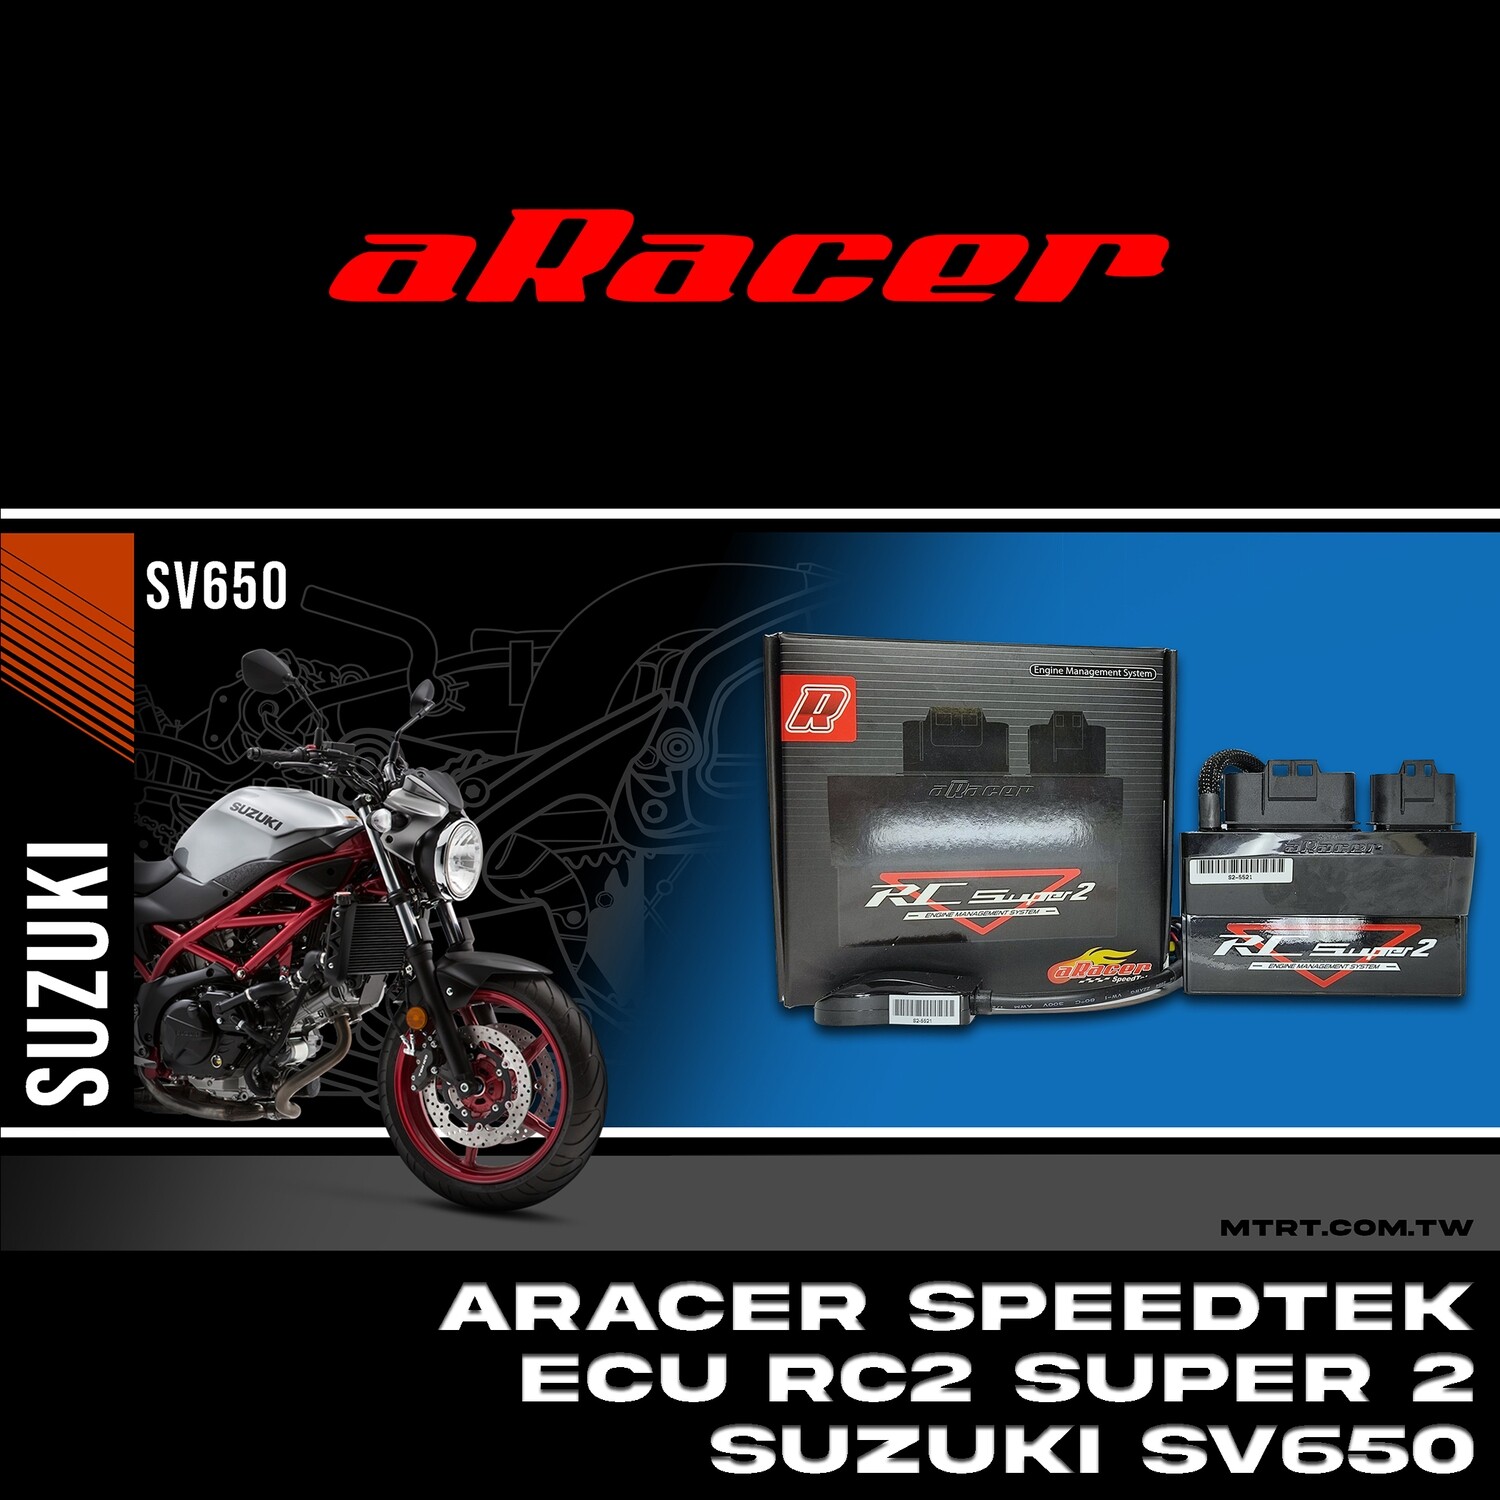 ARACER speedtek ECU RC2 SUPER SUZUKI SV650